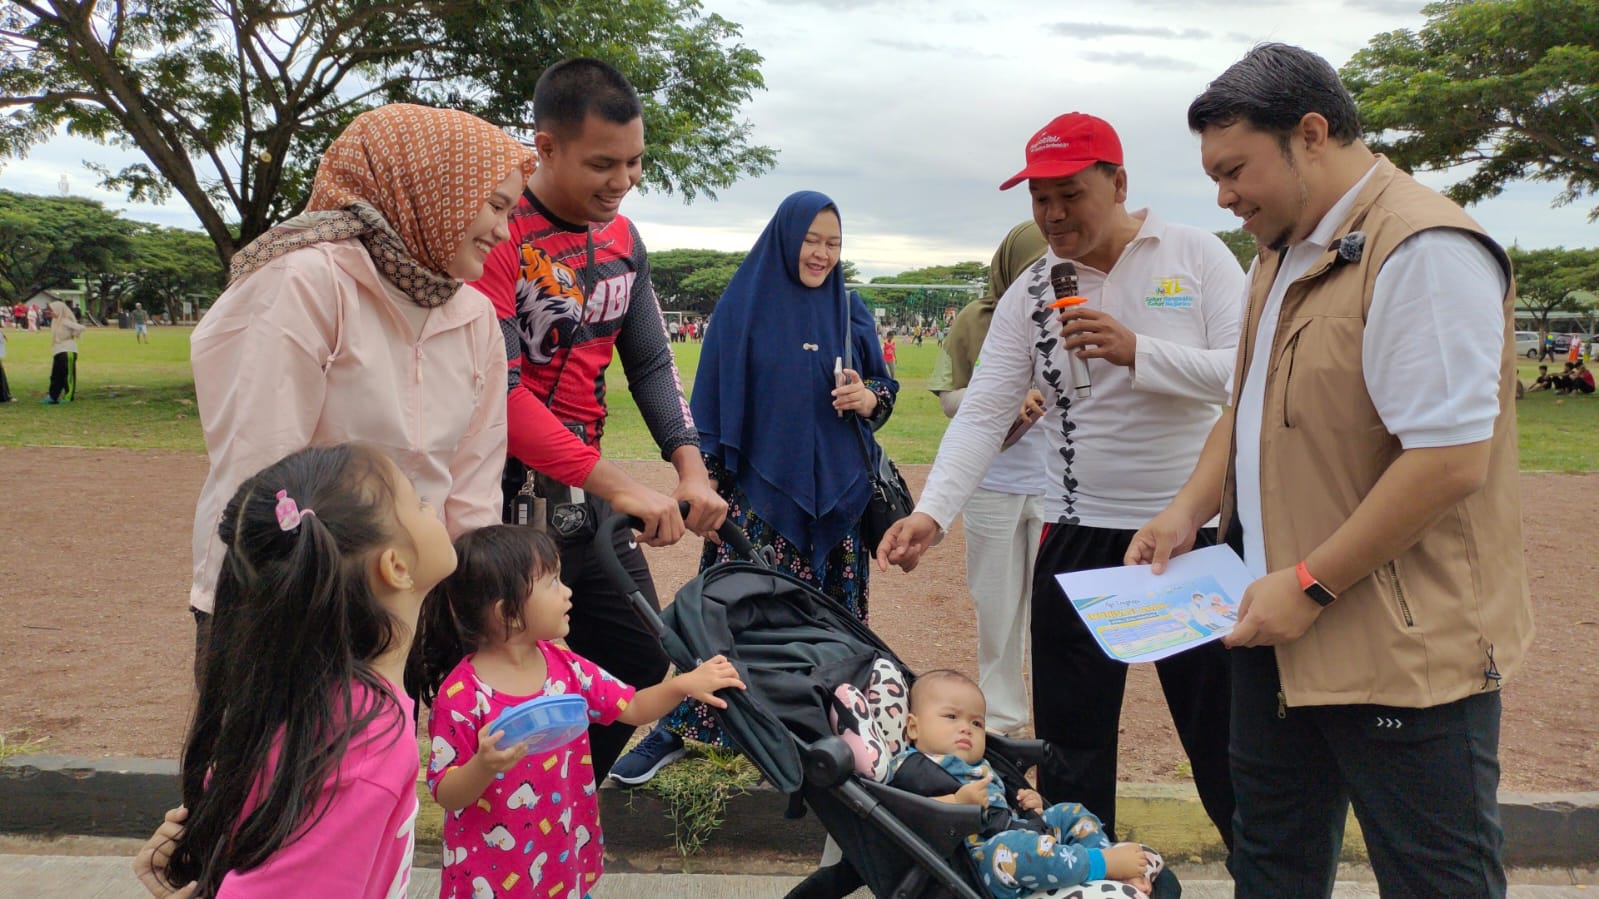 Kepala Bidang (Kabid) Pencegahan dan Pengendalian Penyakit (P2P) Dinas Kesehatan Aceh, dr. Iman Murahman, Sp. KKLP, sedang mensosialisasikan pentingnya imunisasi untuk mencegah berbagai penyakit kepada pengunjung Blang Padang B. Aceh pada Minggu (10/09).